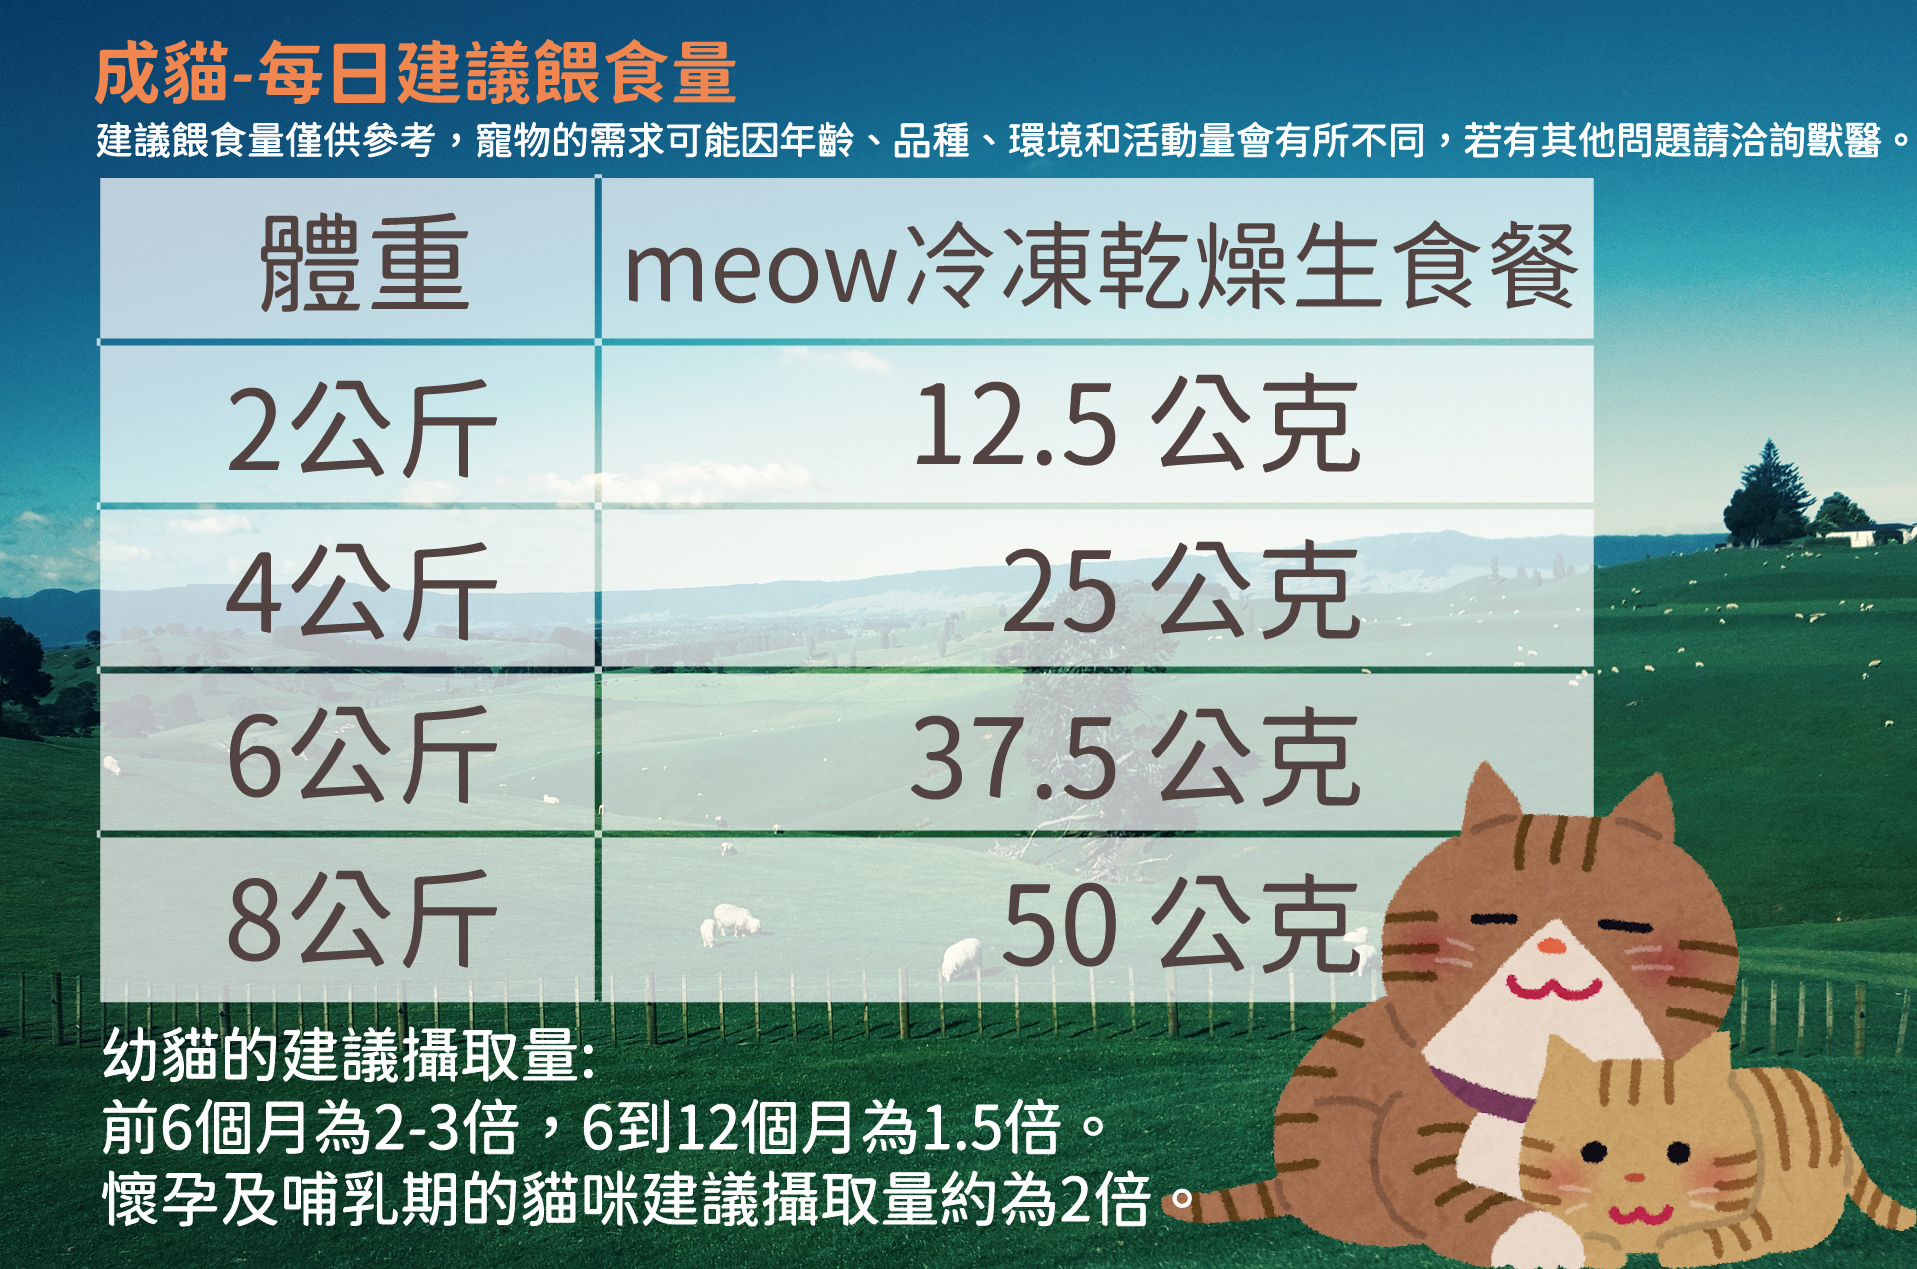 NZ Natural鮮開凍 meow-貓咪冷凍乾燥生食餐